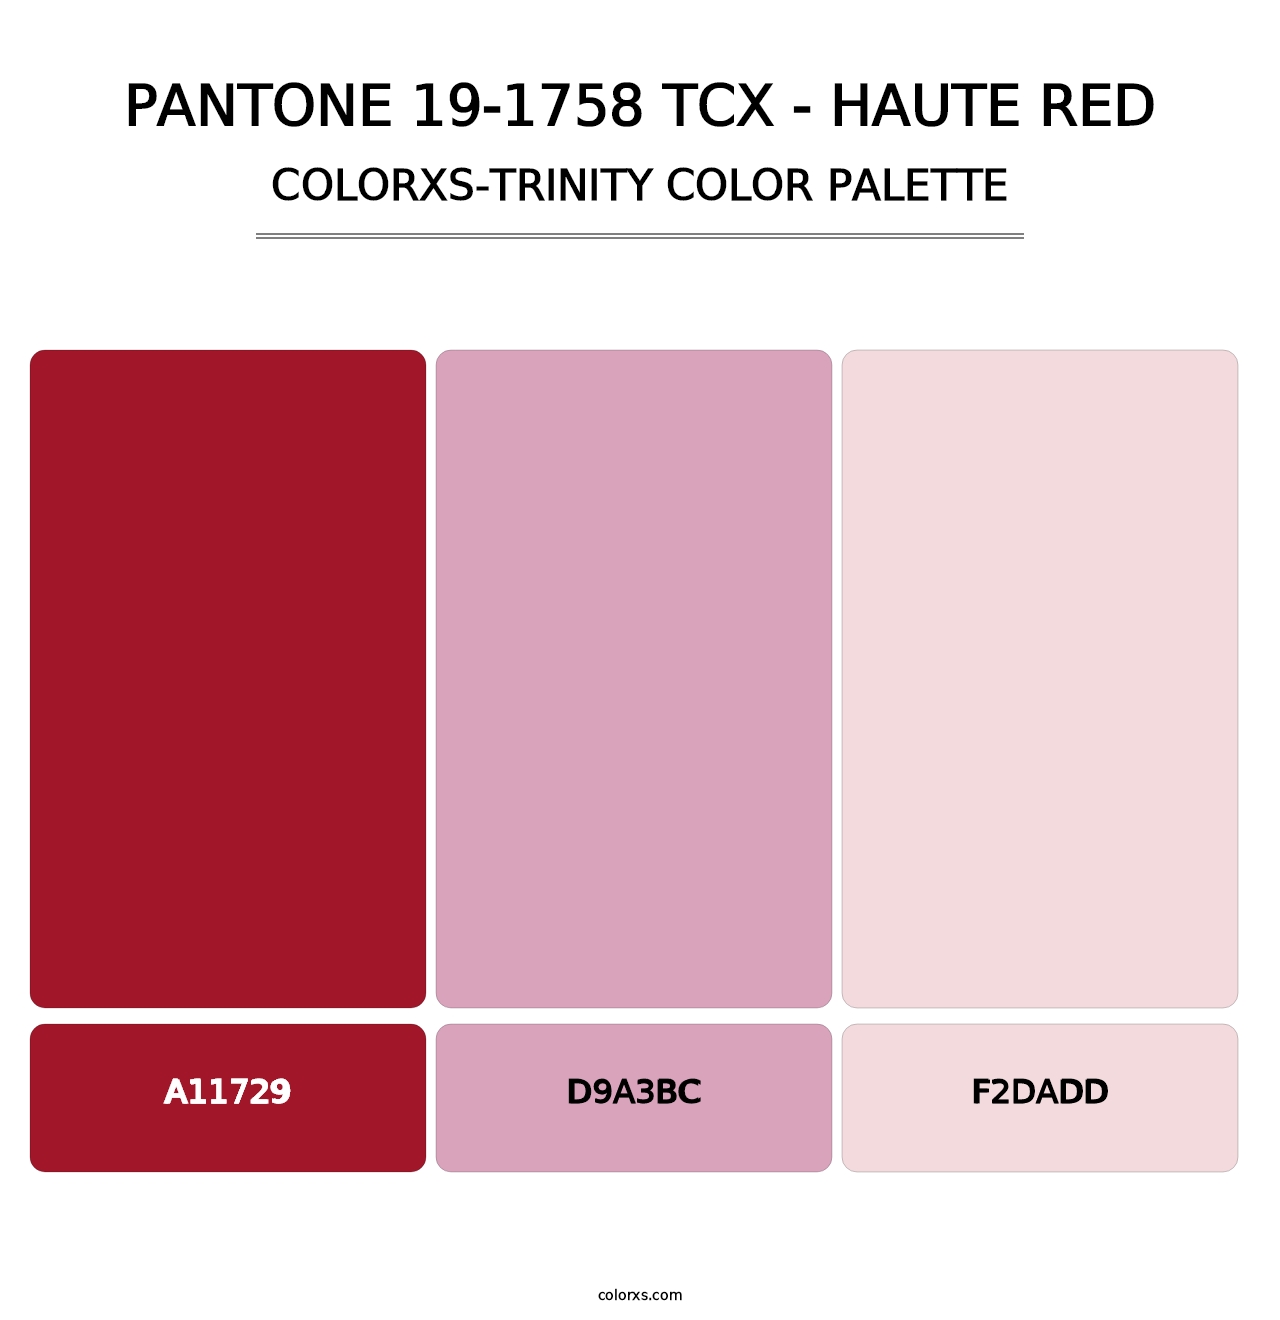 PANTONE 19-1758 TCX - Haute Red - Colorxs Trinity Palette